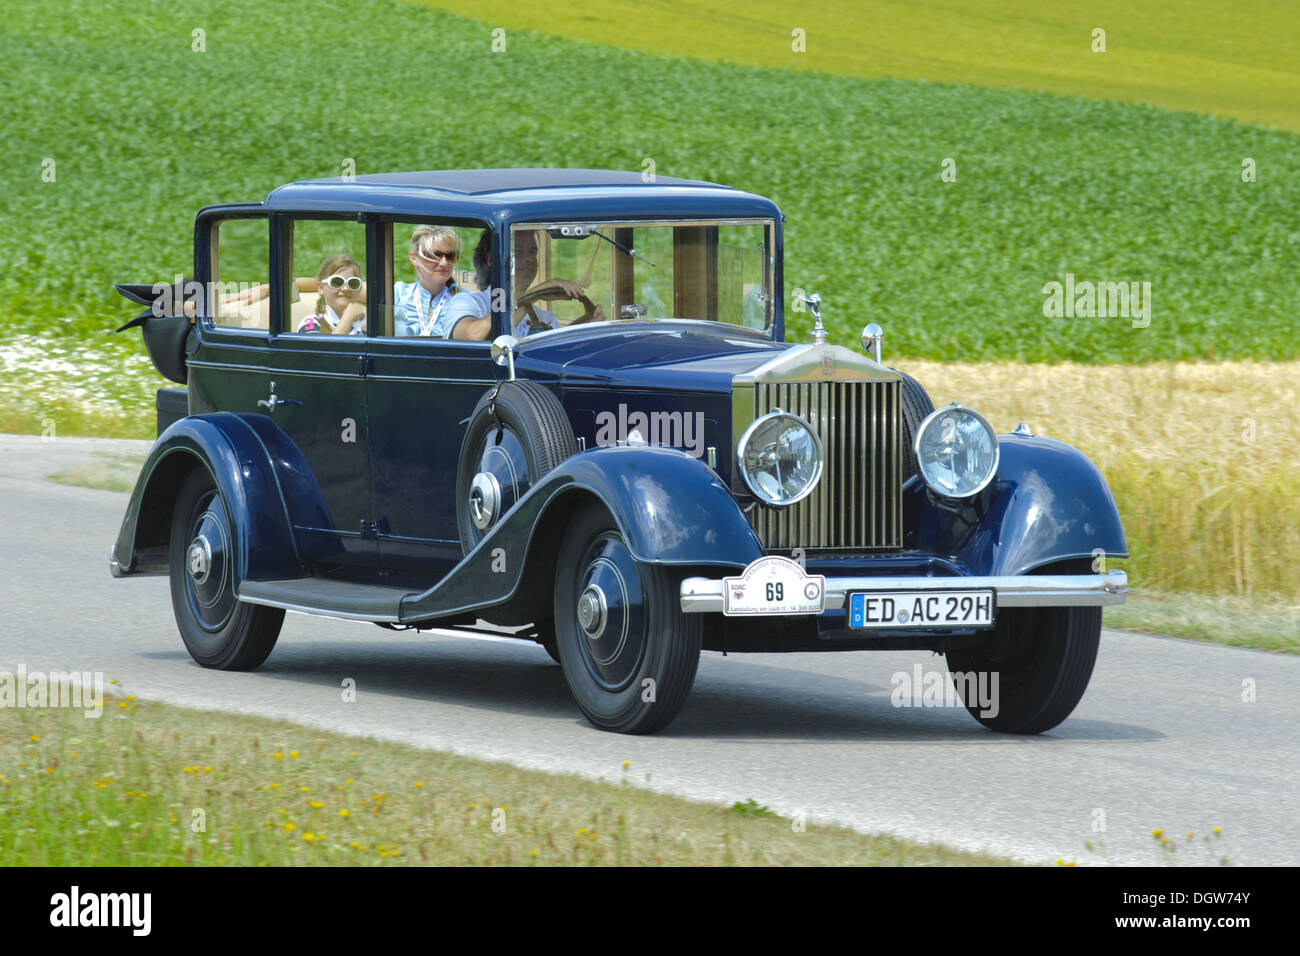 oldtimer car Rolls Royce Landaulet Stock Photo